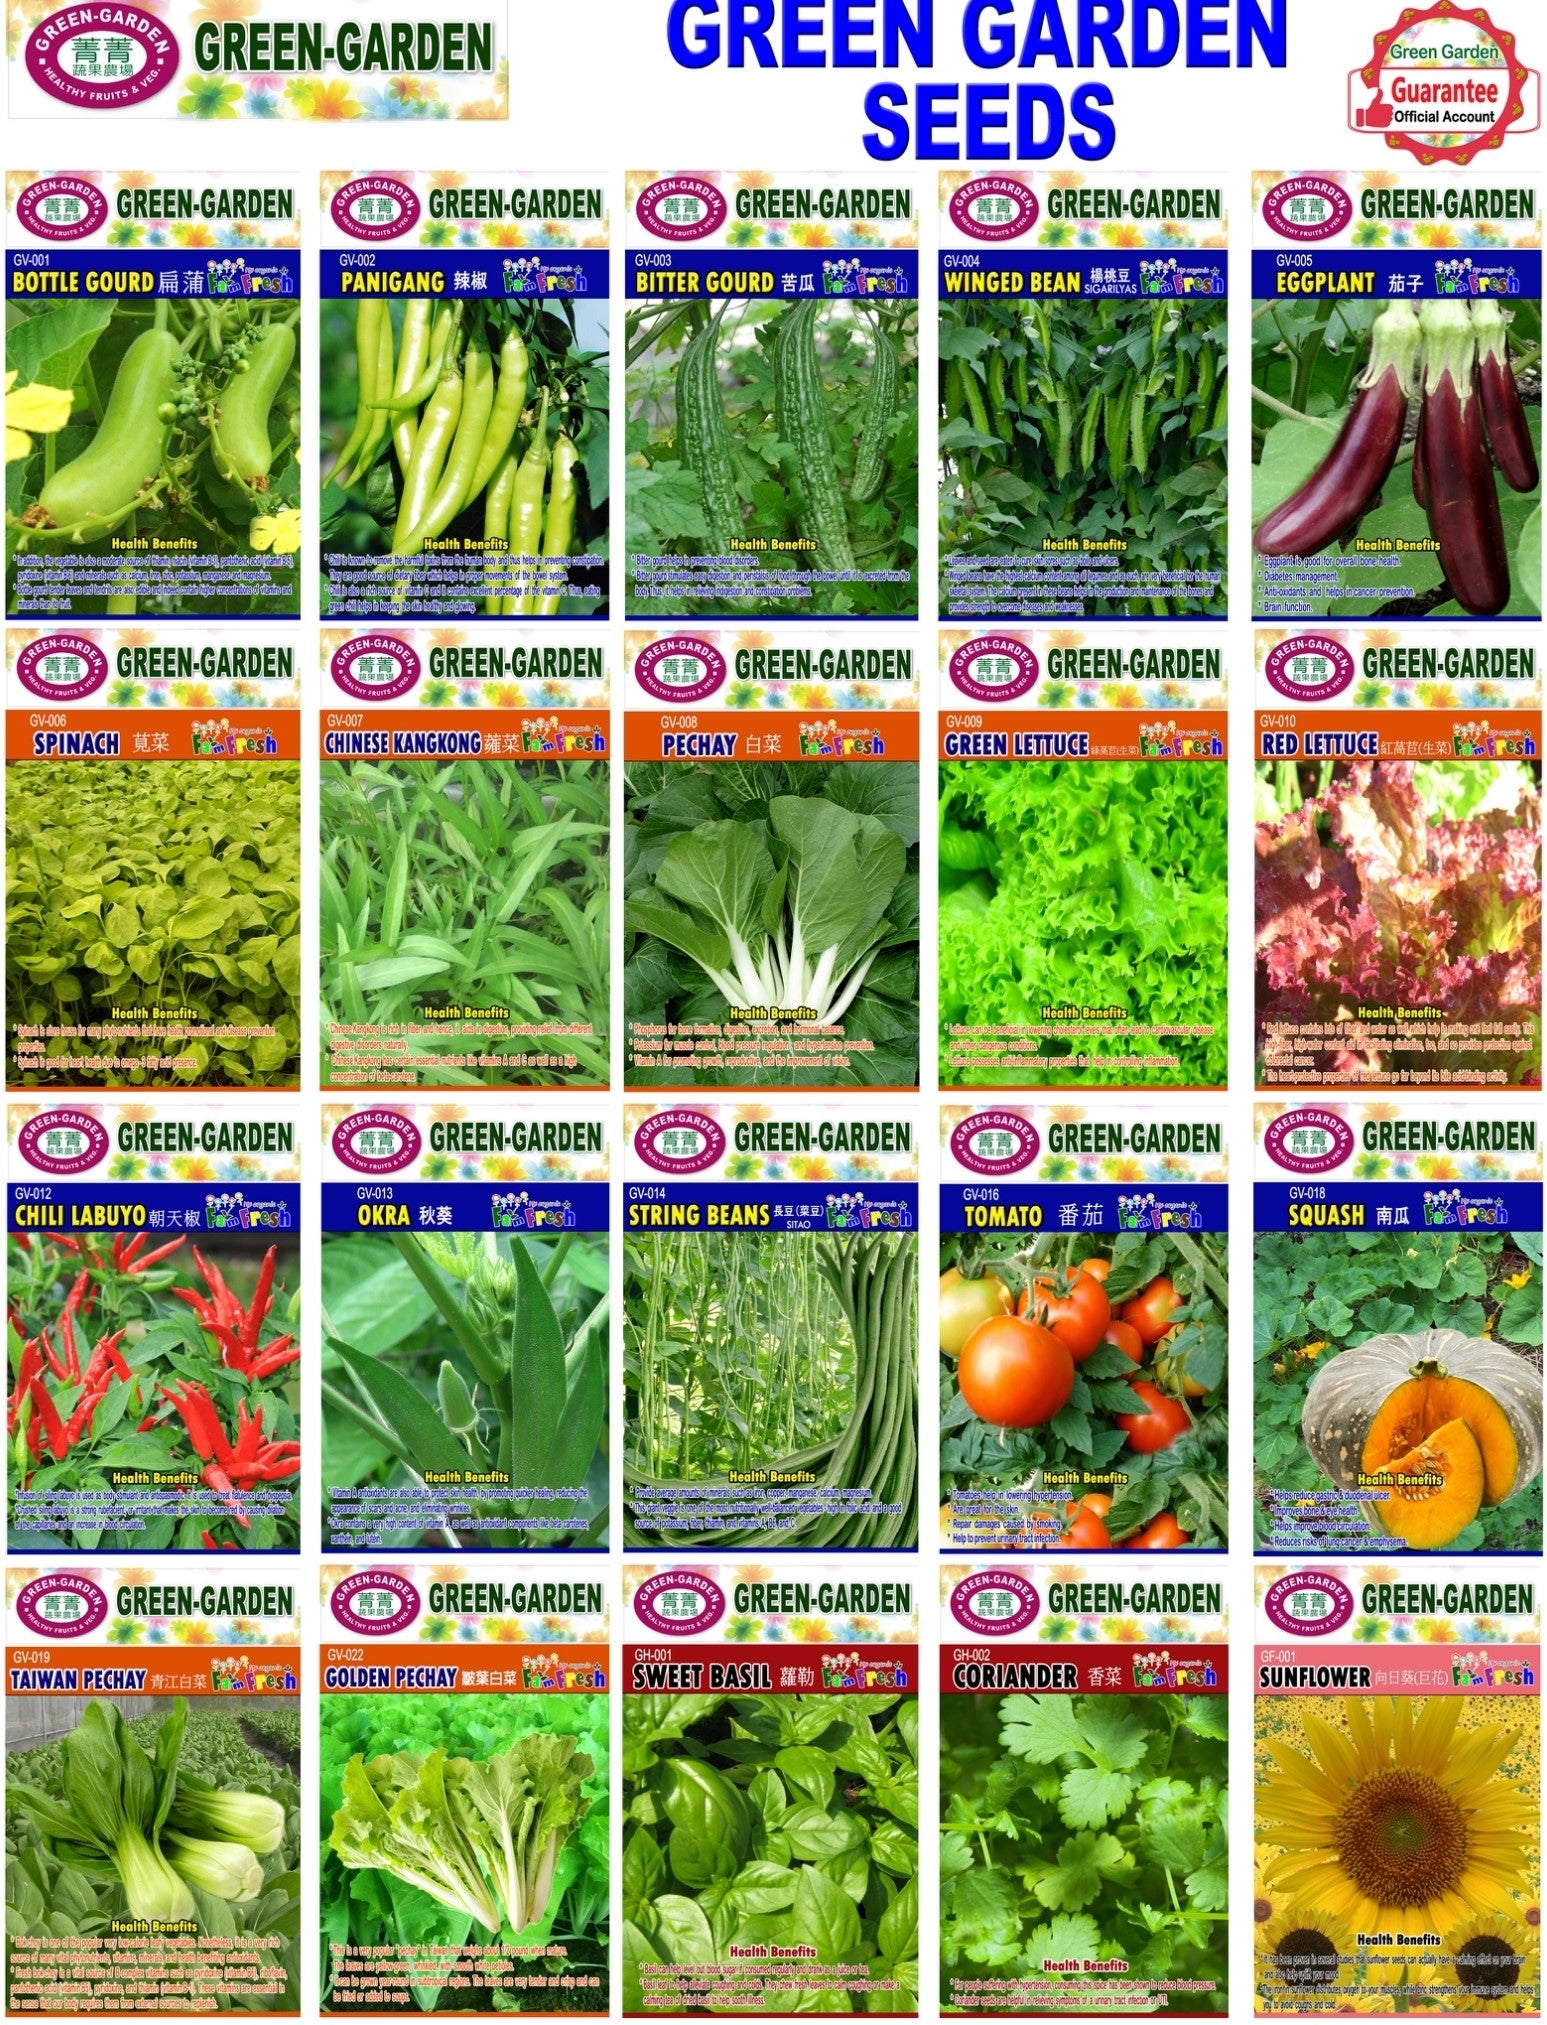 Green Garden Vegetable Seeds (GV-022 Golden Pechay)